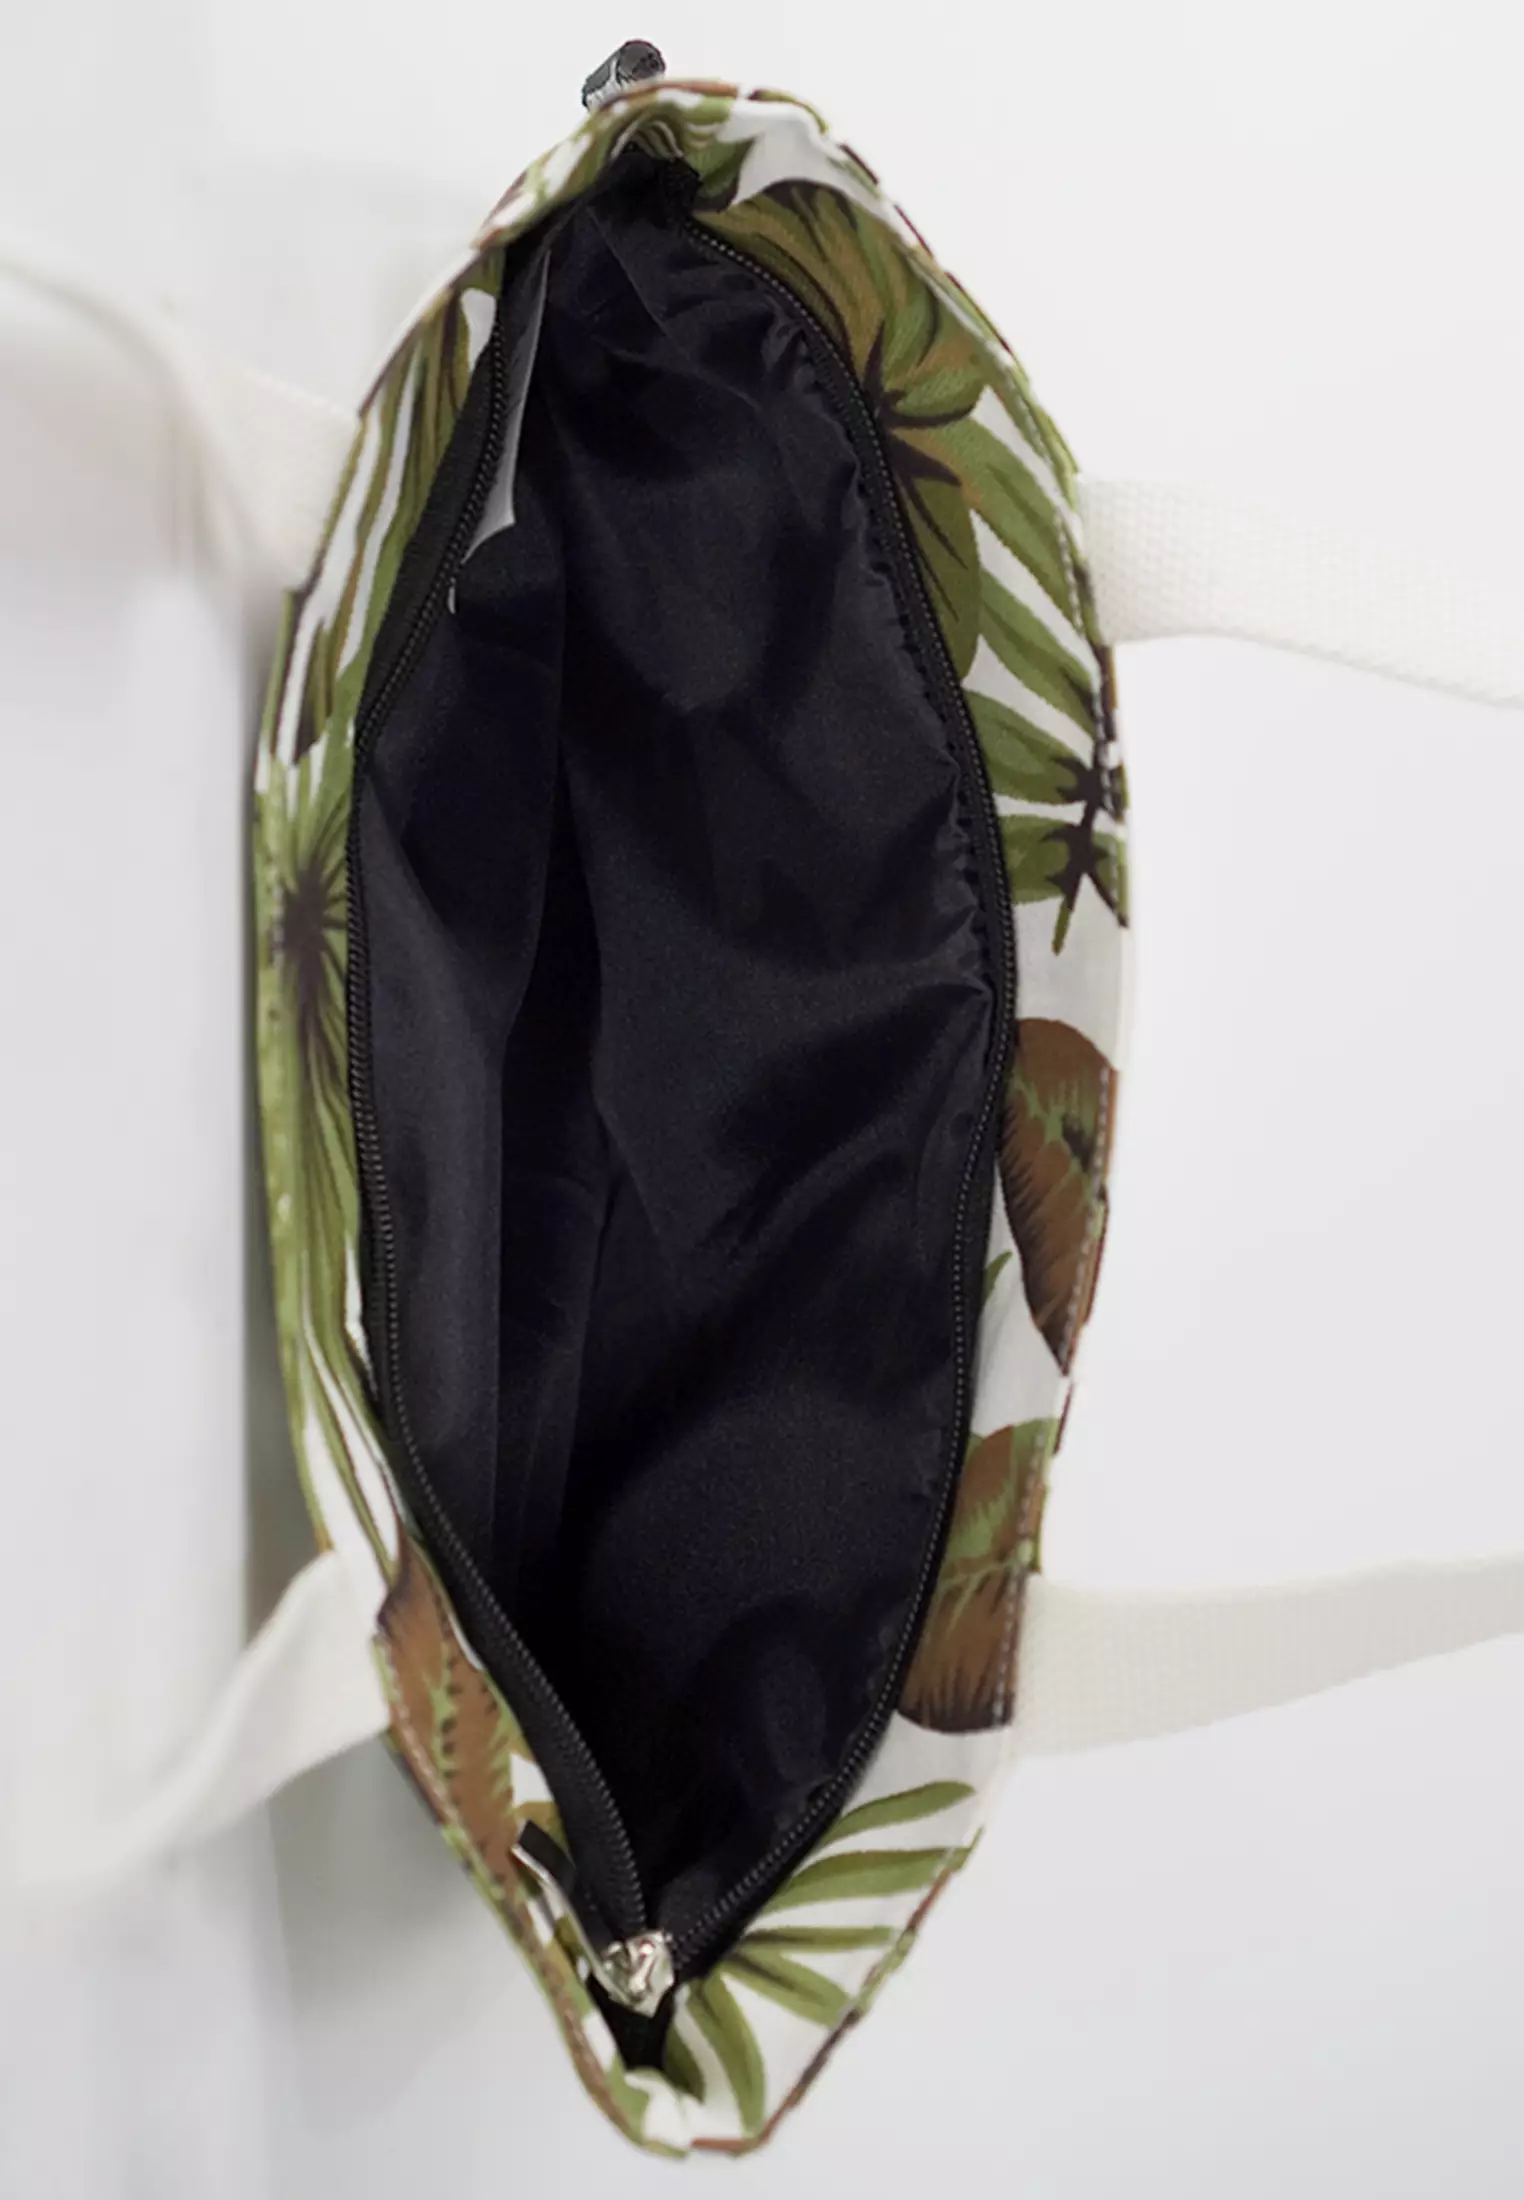 Jual Pamole Tas Tote Bag Wanita Bahan Kanvas Motif - Navy Leaf Original  2023